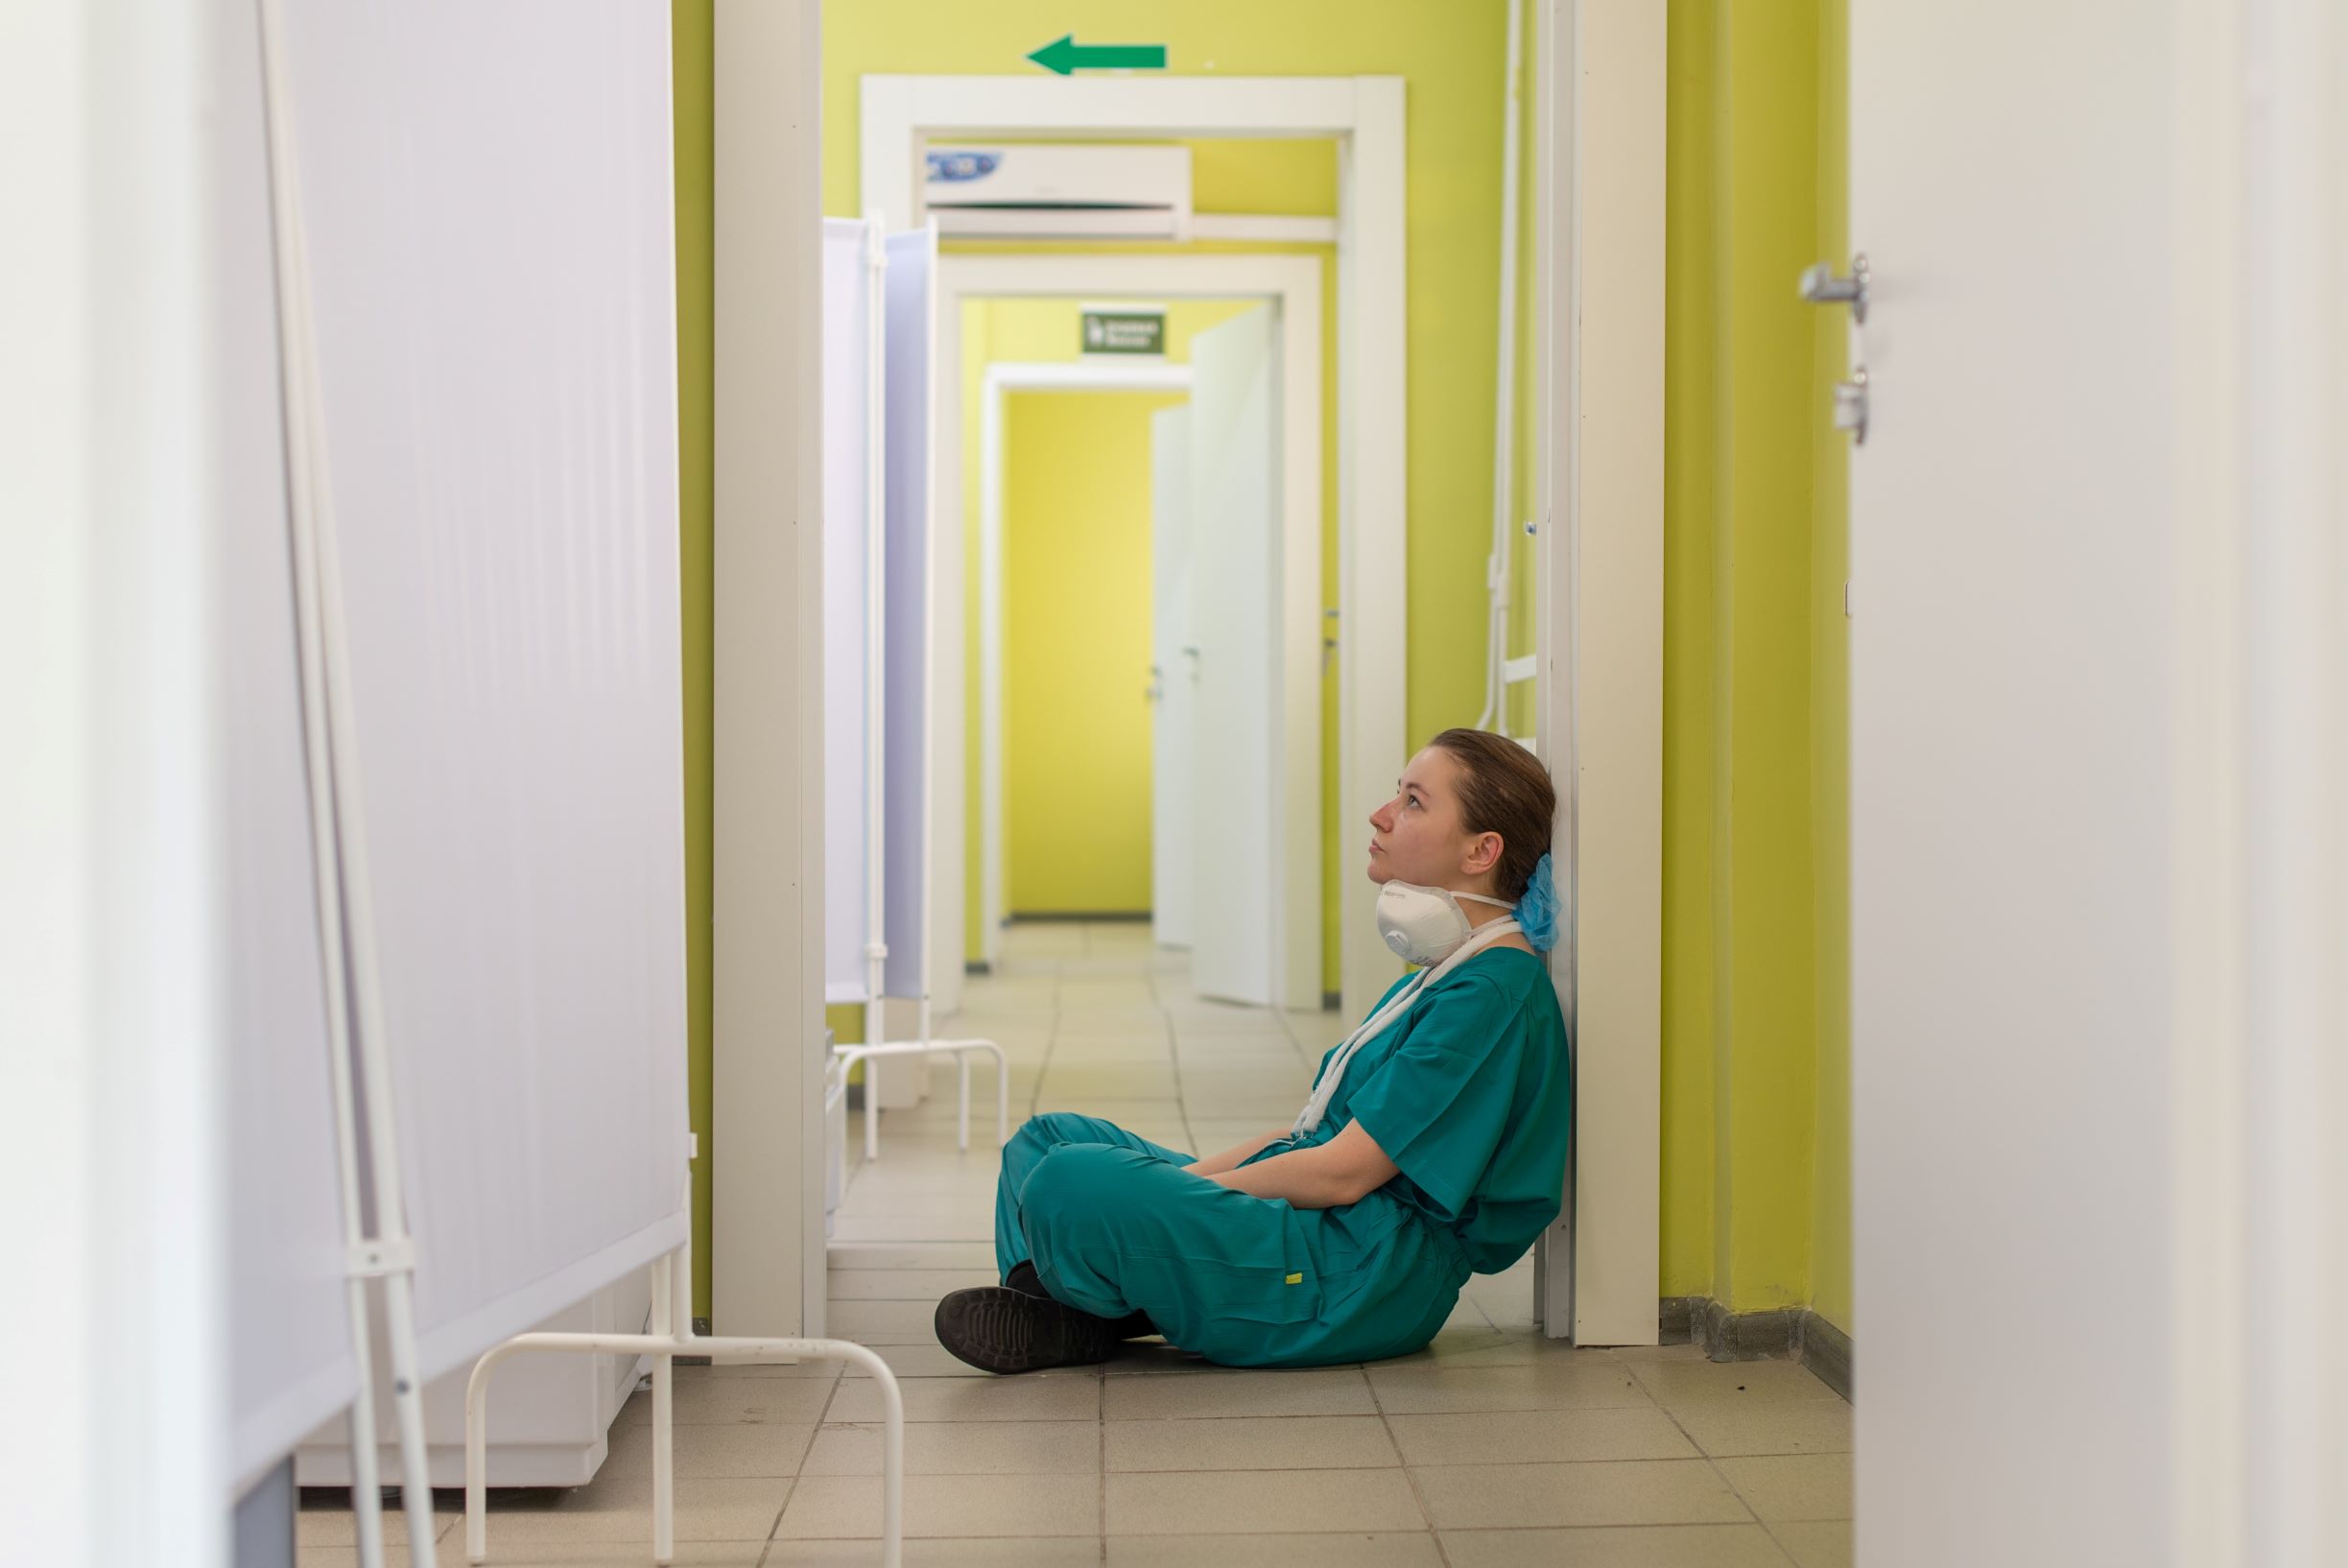 retain nurses through interventions for nurse burnout prevention